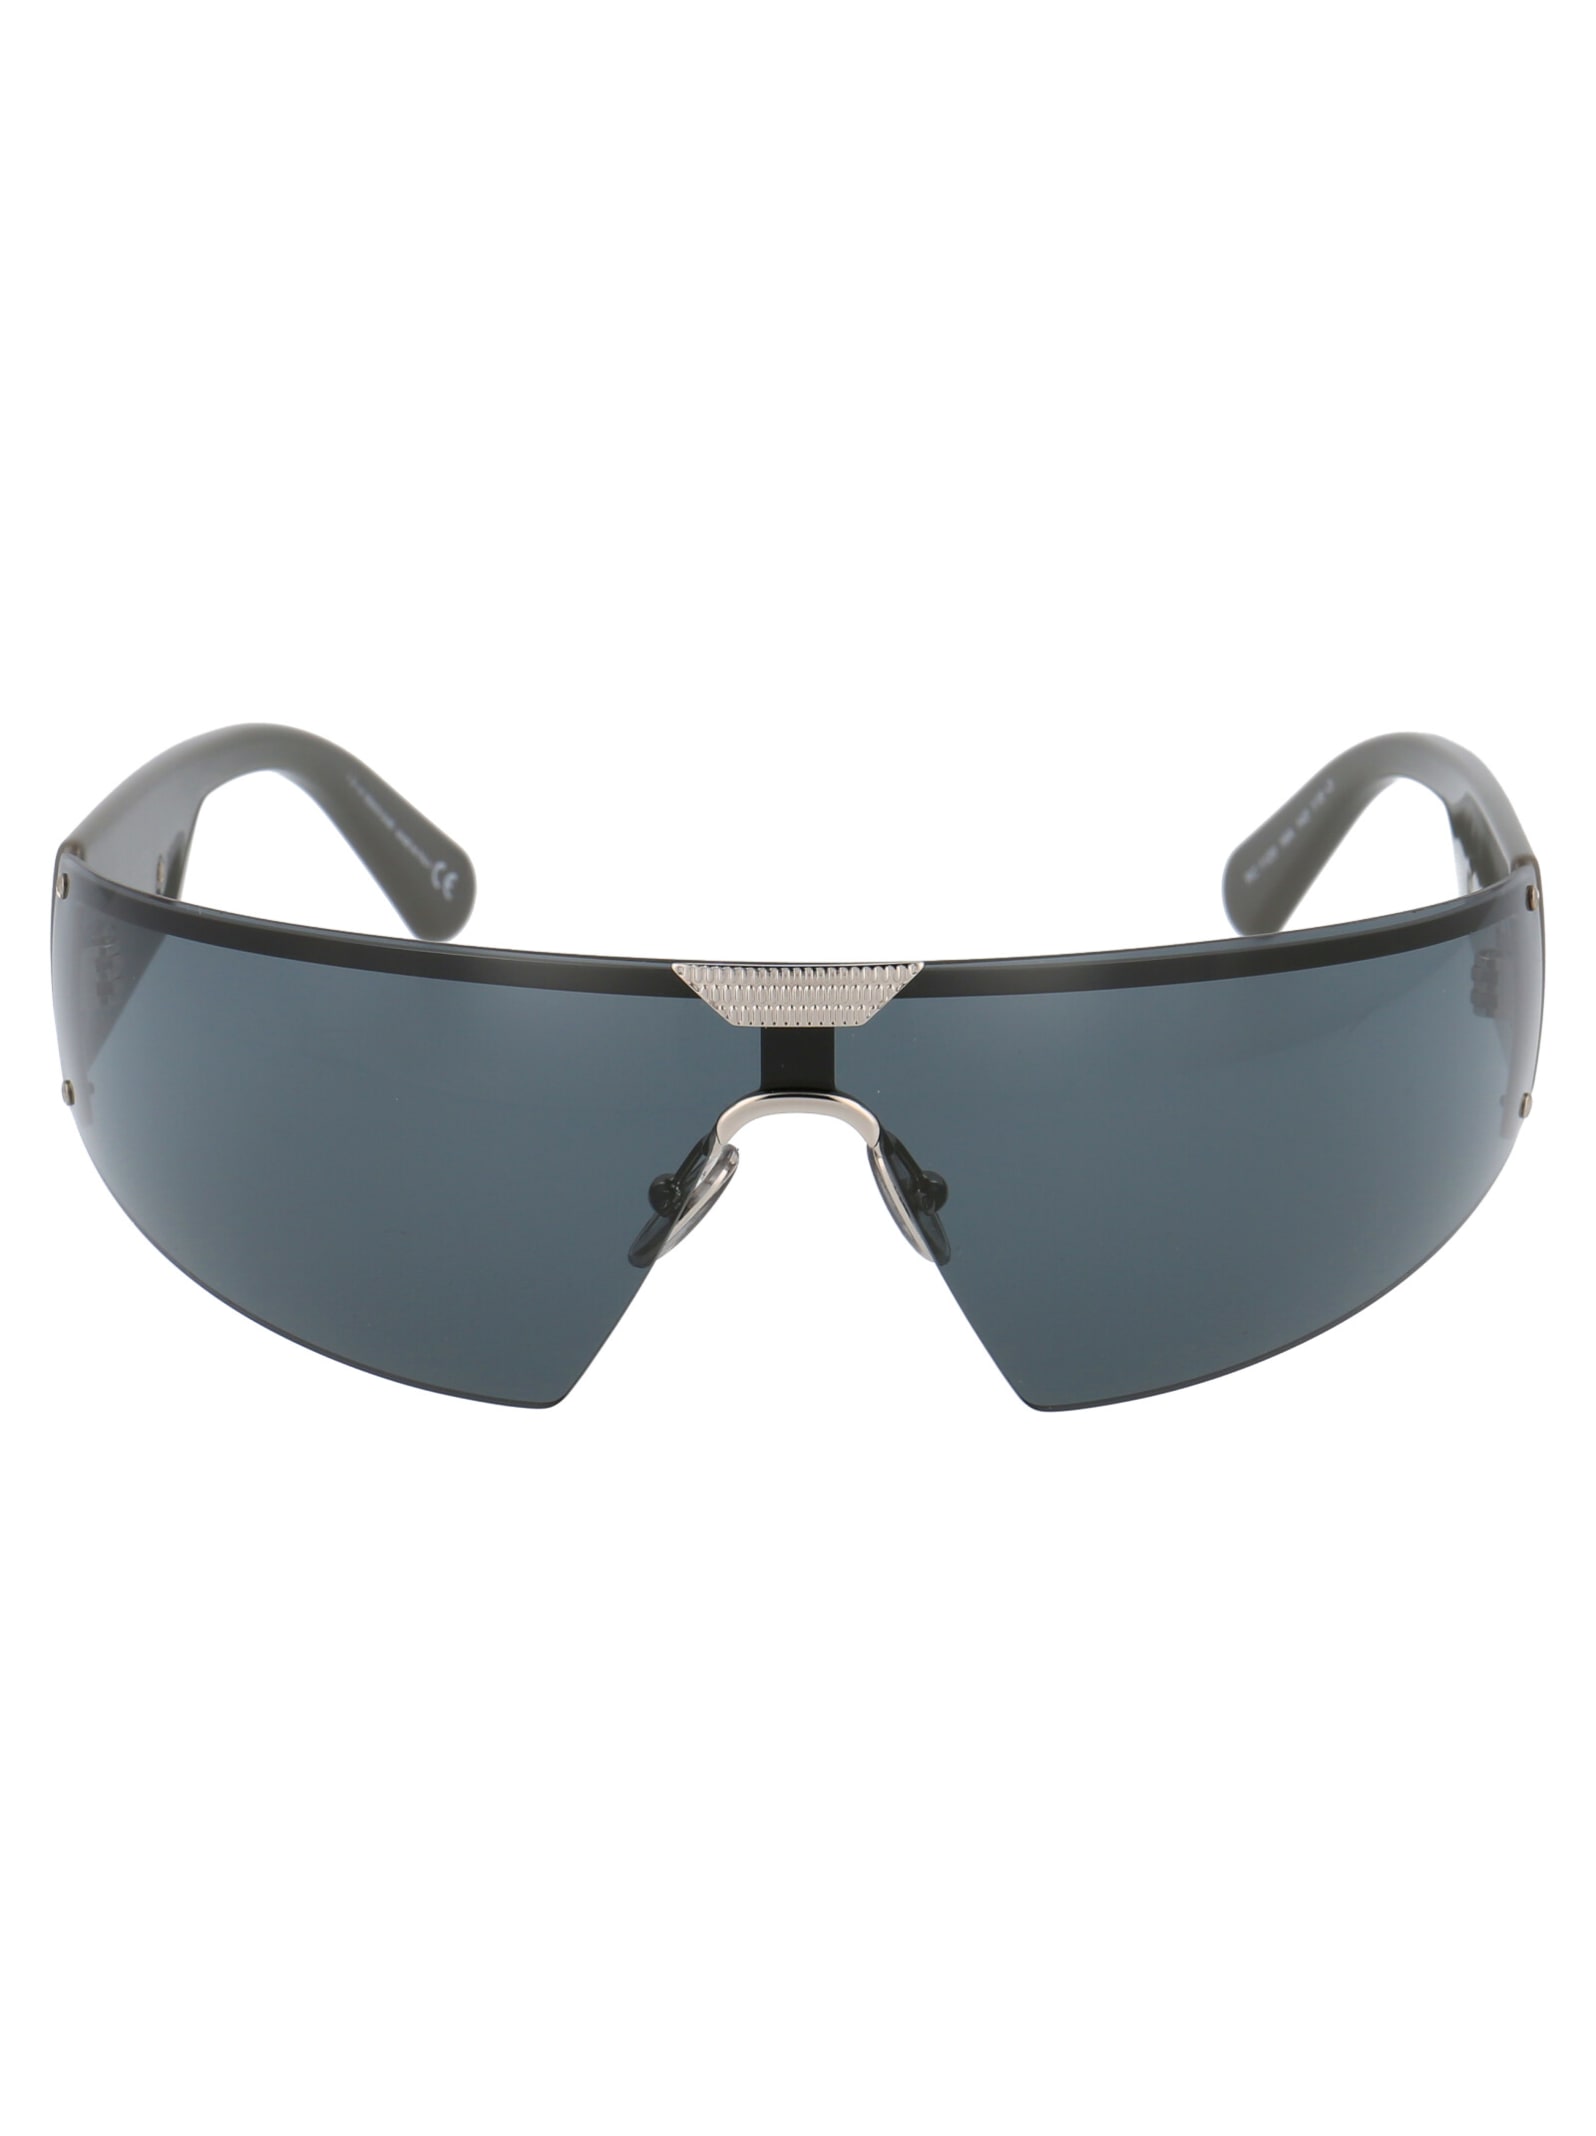 Roberto Cavalli Rc1120 Sunglasses